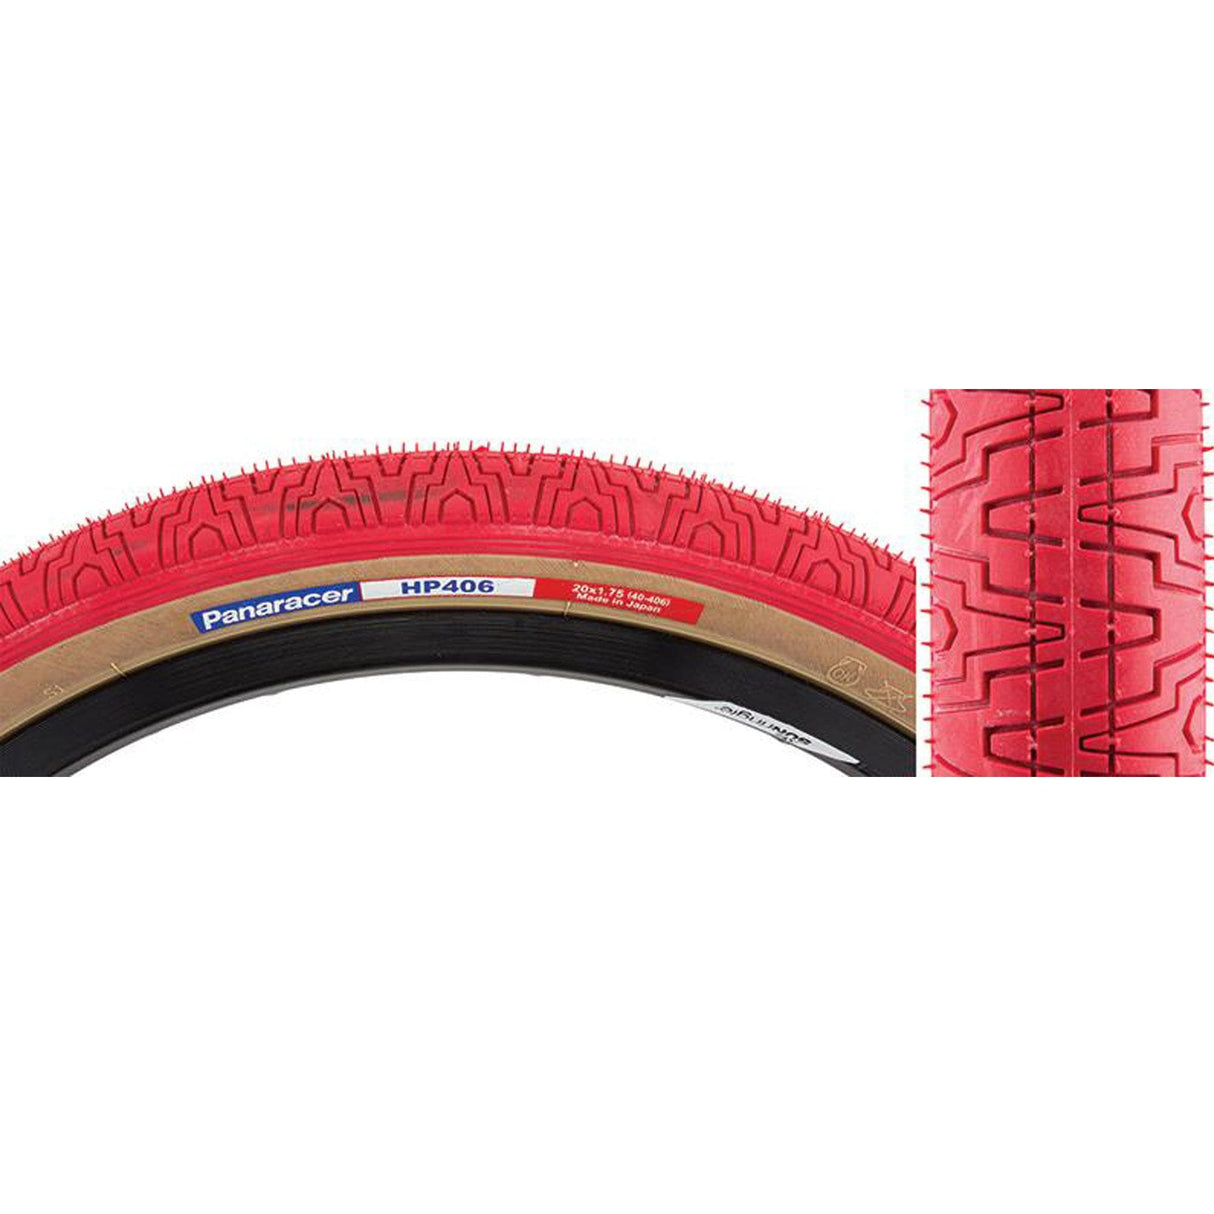 Panaracer Hp406 Bmx Tyre: Red/Amber 20X1.75"